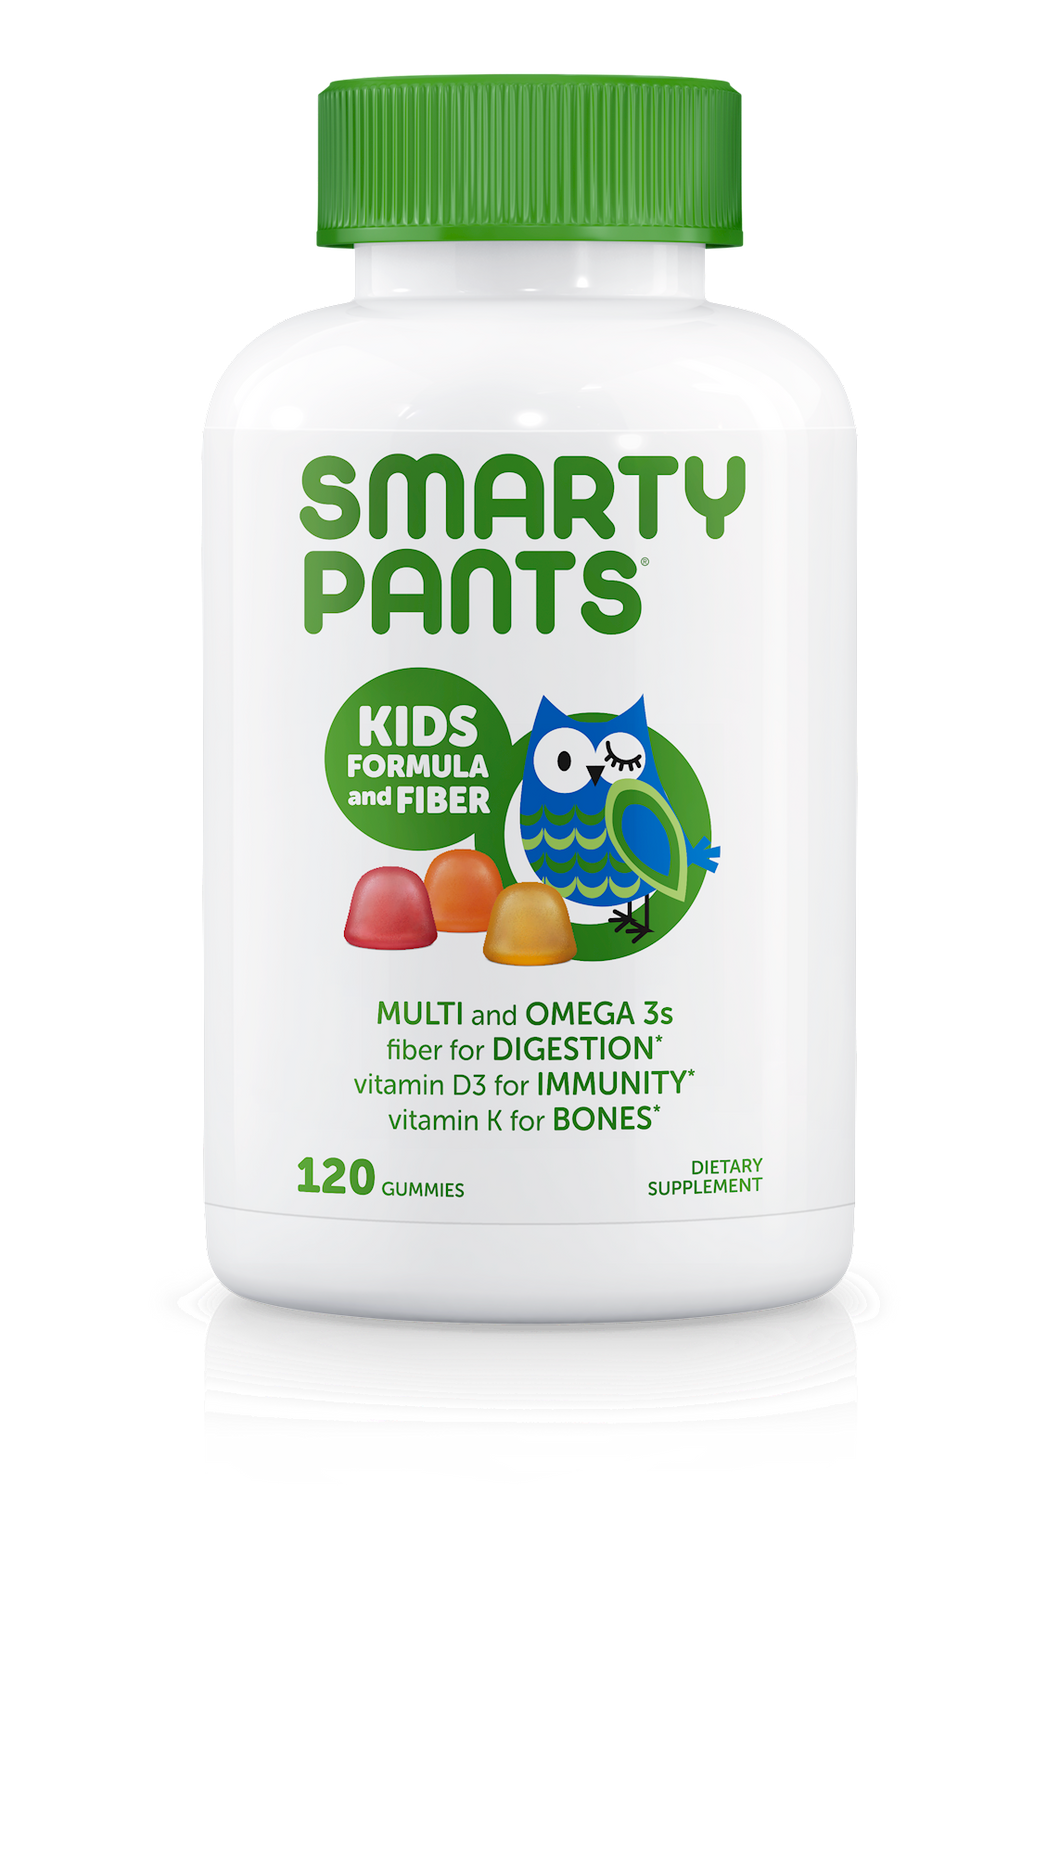 Smarty Pants Kids Formula and Fiber (120 gummies)